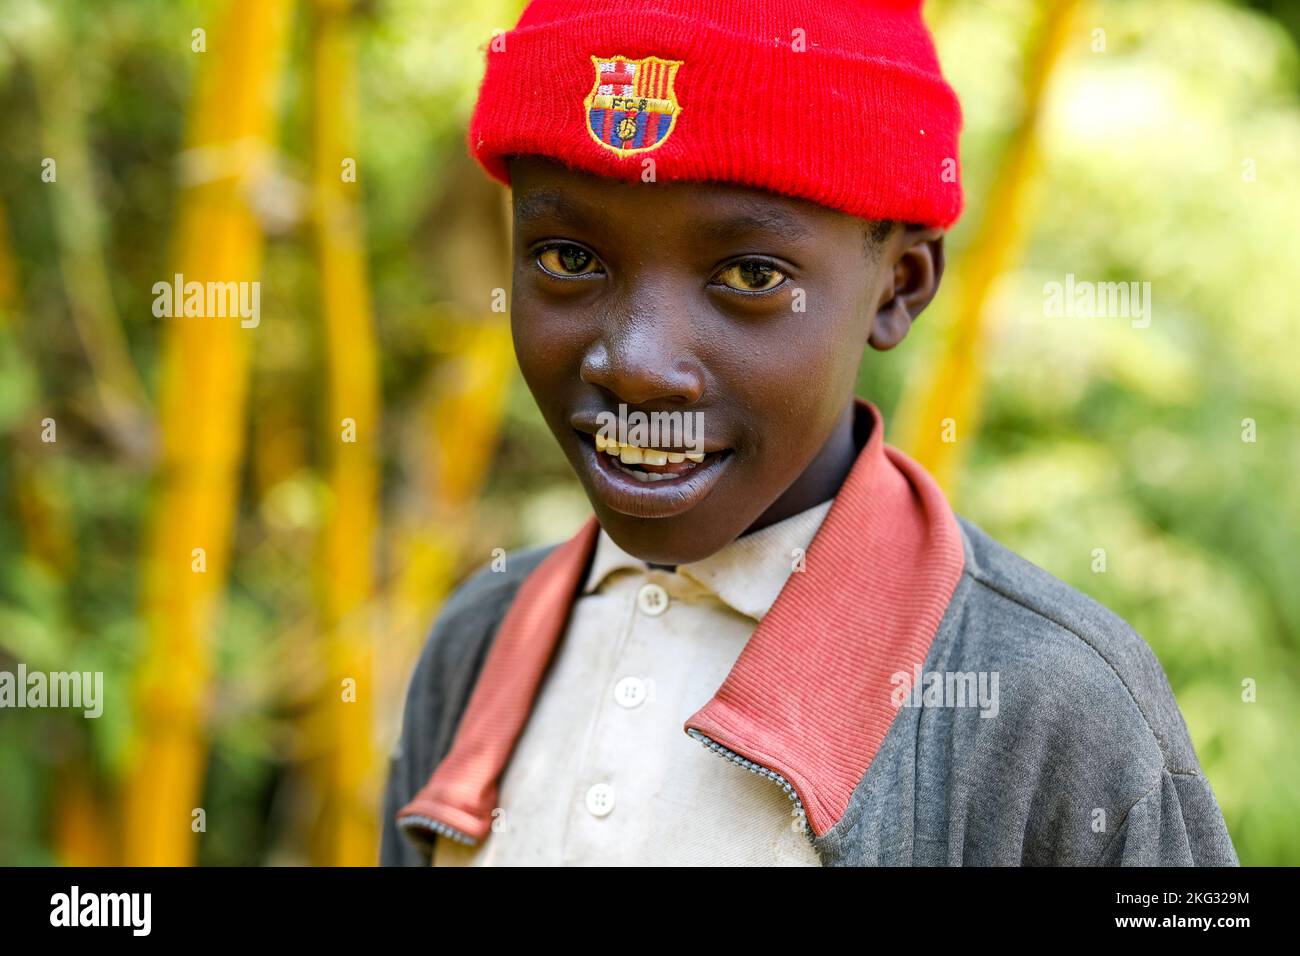 Garçon portant un chapeau de football rouge, district de Muhanga, Rwanda Banque D'Images